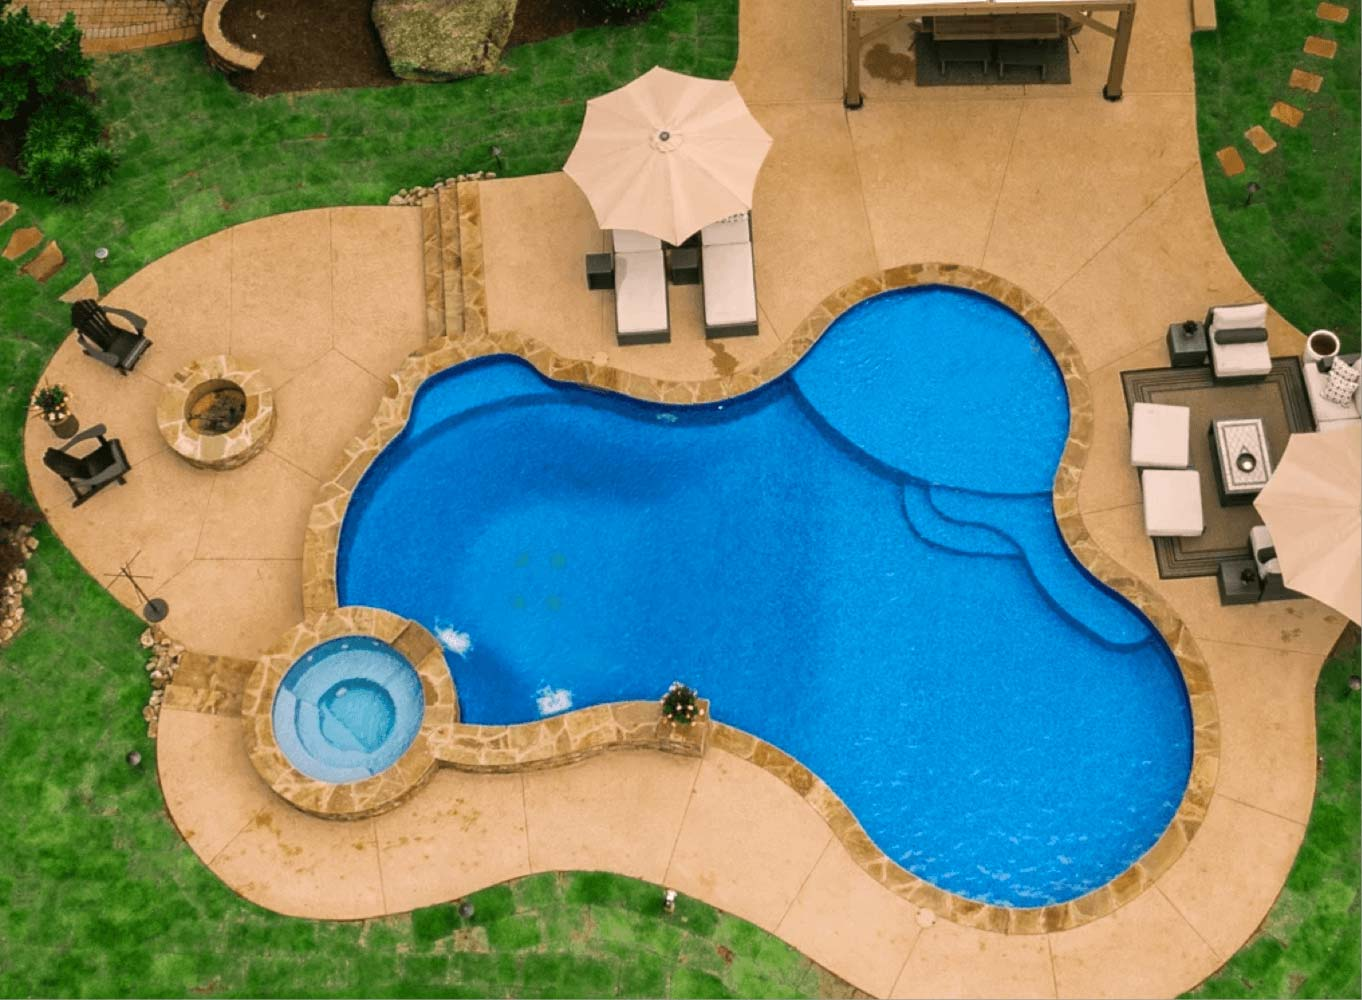 A uniquely designed vinyl pool by Latham